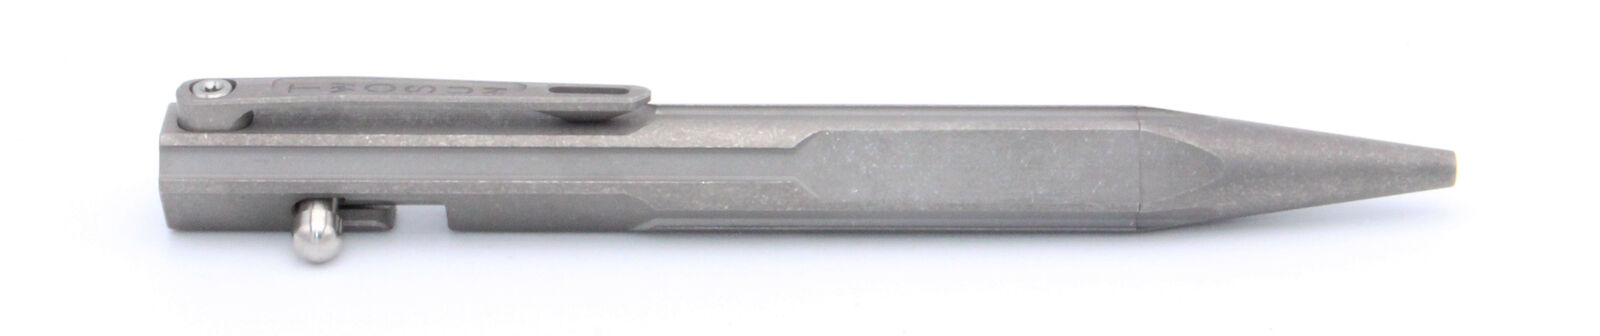 TwoSun Tactical Pen TC4 Titanium Alloy PEN-02-Titanium